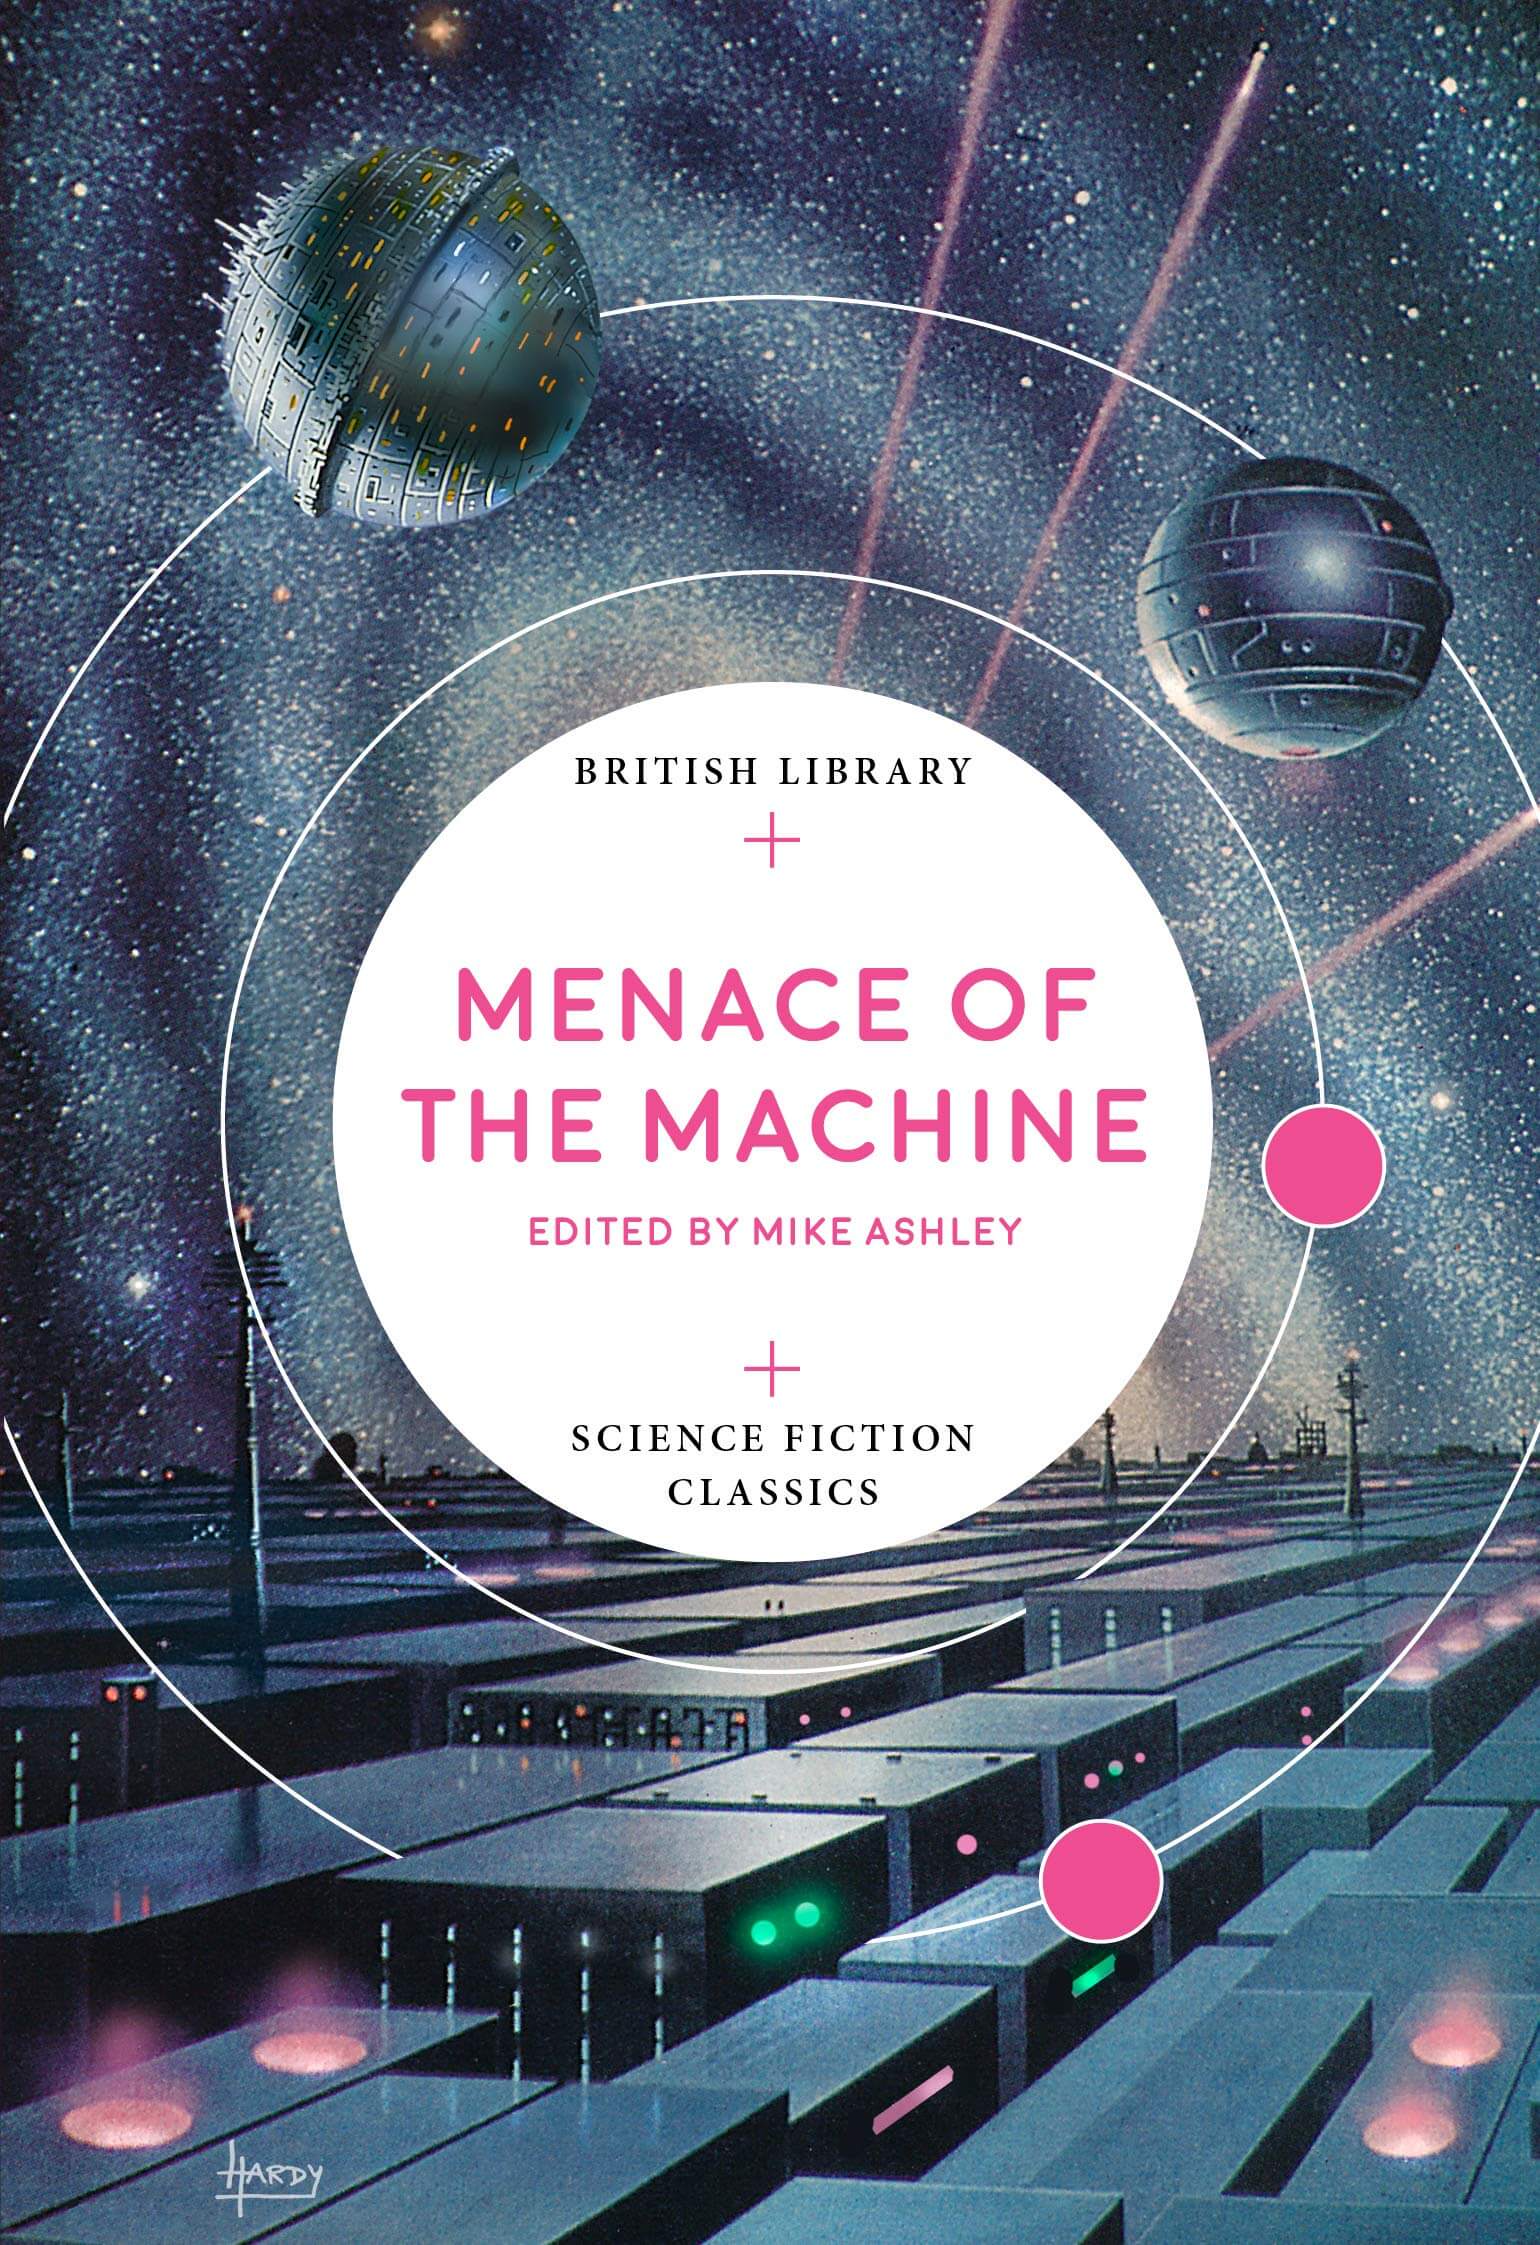 MENACE OF THE MACHINE